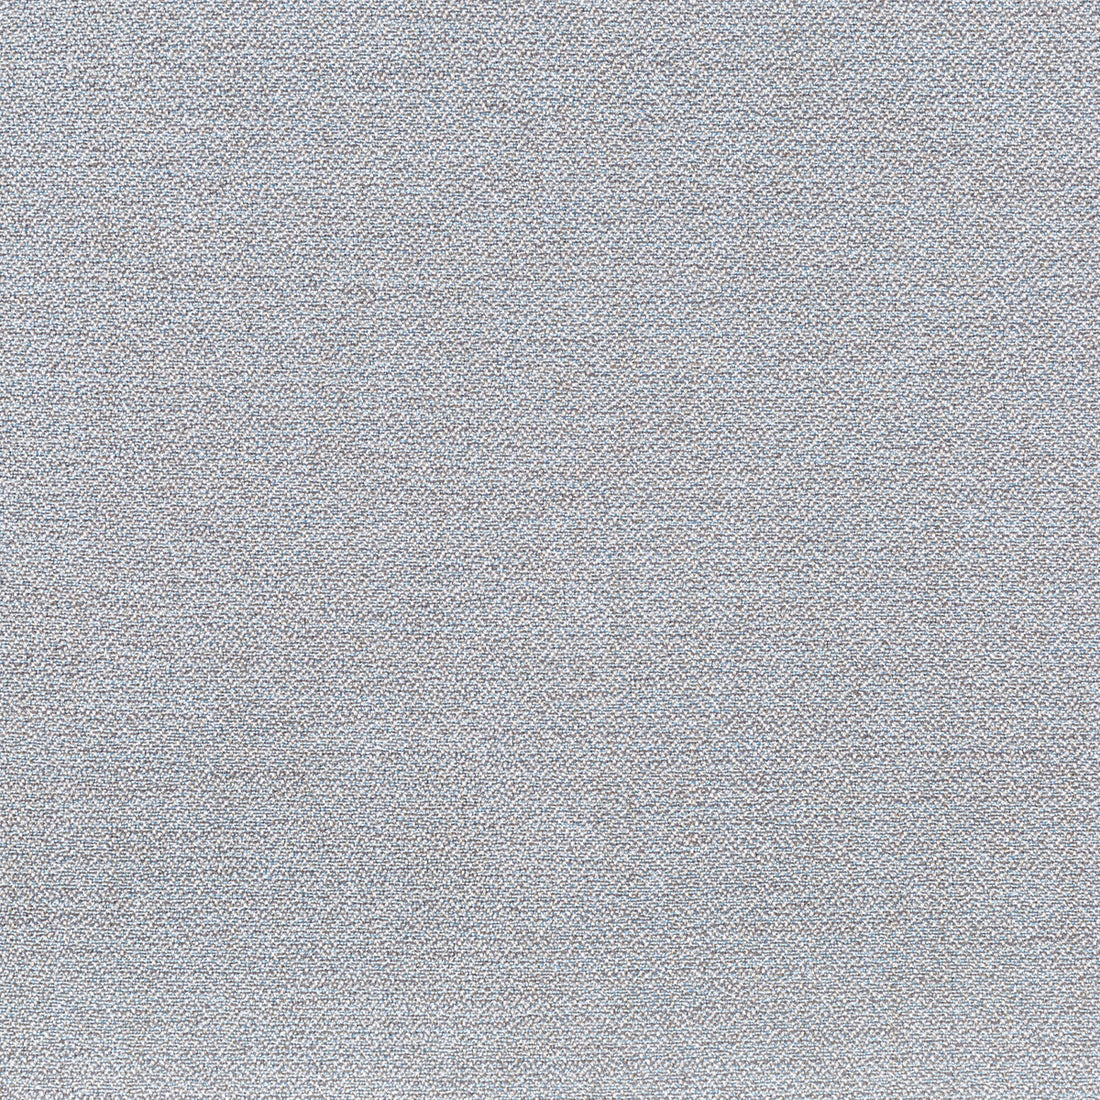 Kravet Smart fabric in 35942-115 color - pattern 35942.115.0 - by Kravet Smart in the Performance Kravetarmor collection